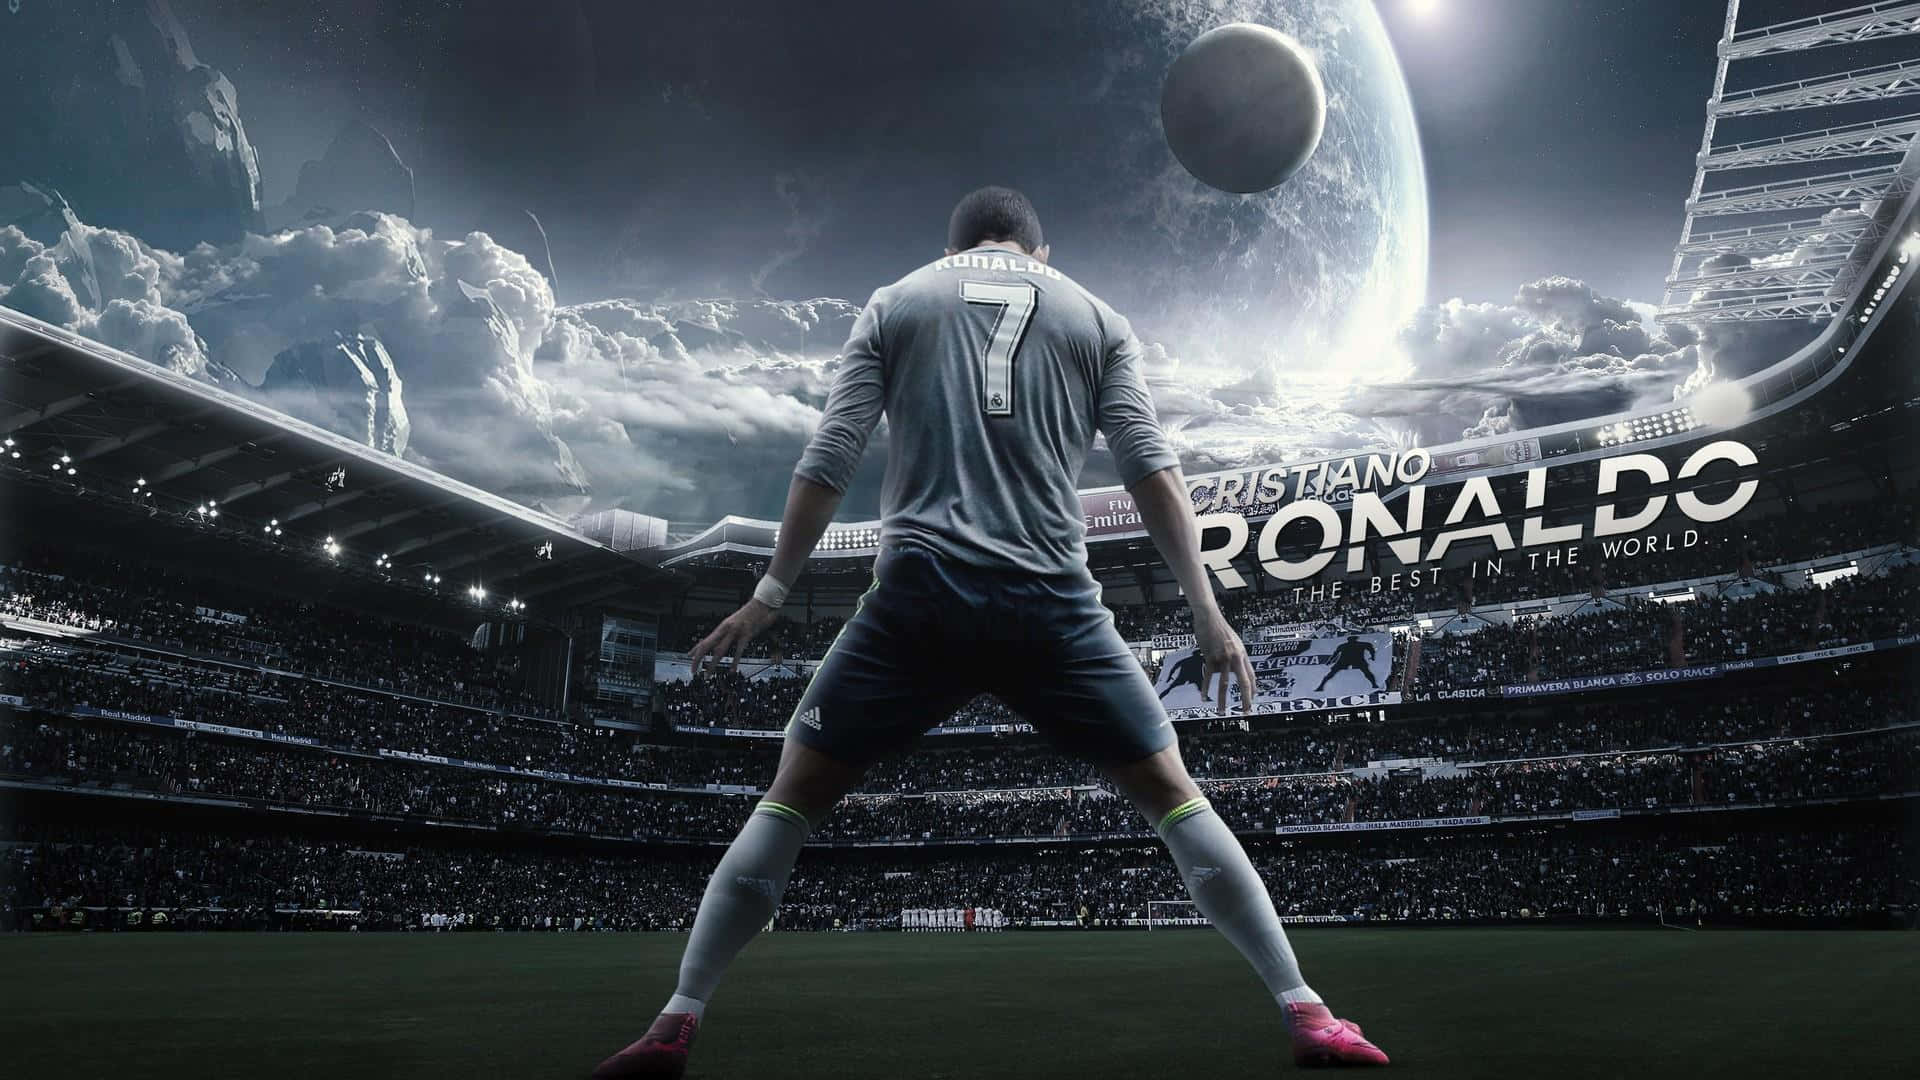 Iconic footballer Cristiano Ronaldo displaying his athleticism